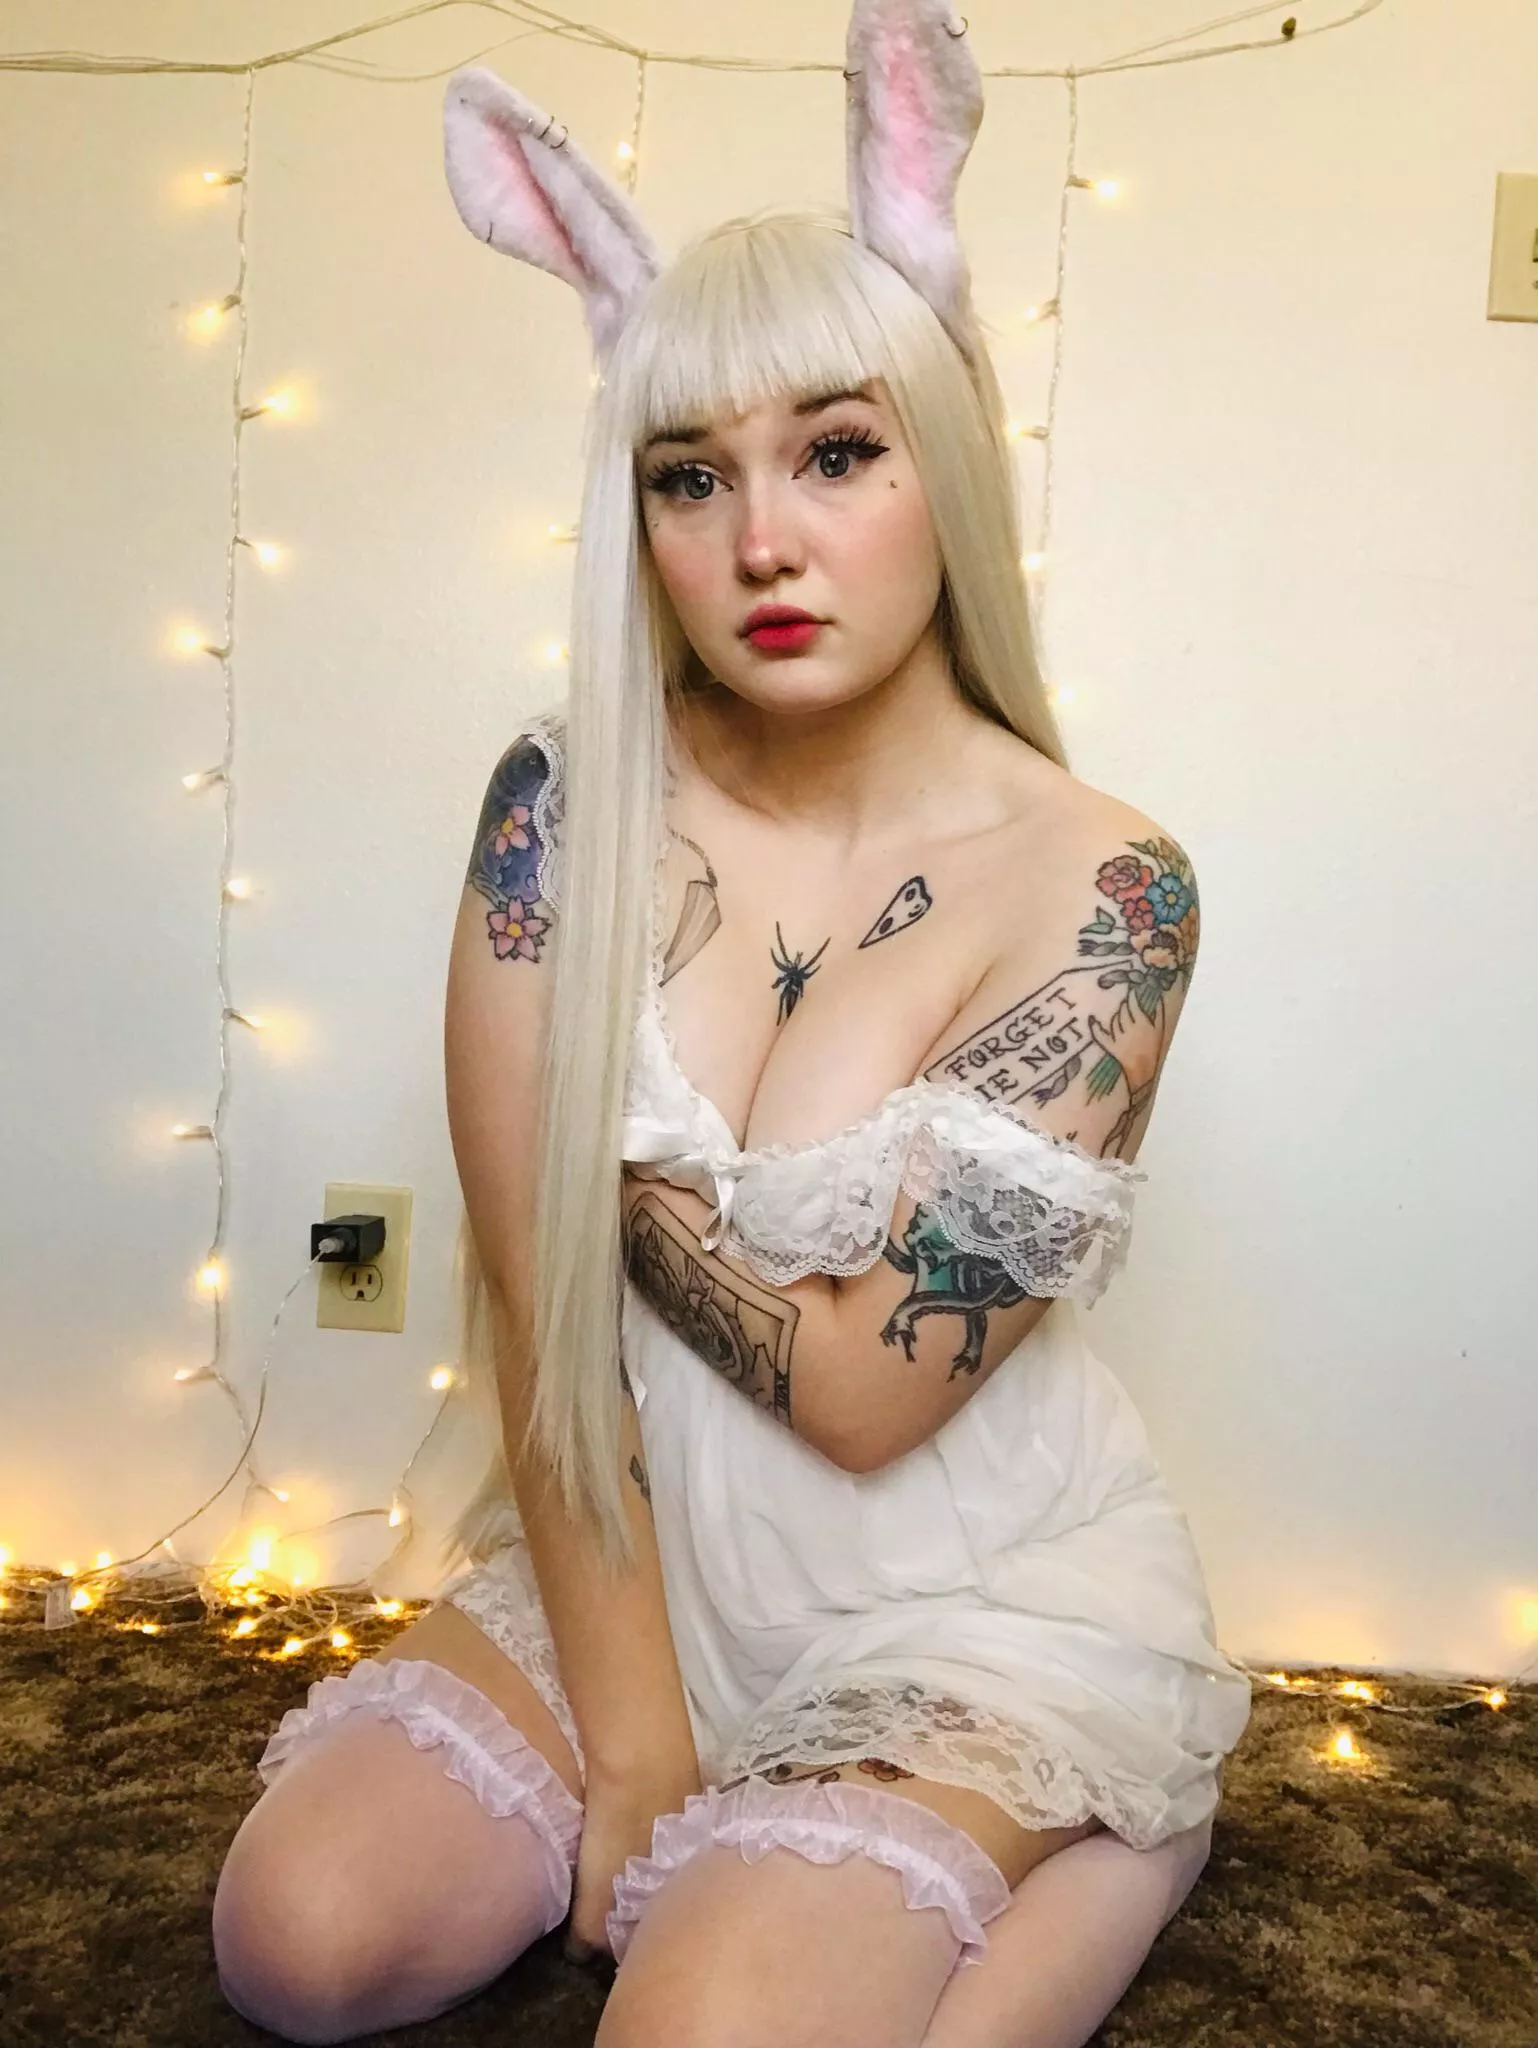 Follow the white rabbit @your_white_rabbitt nude pics